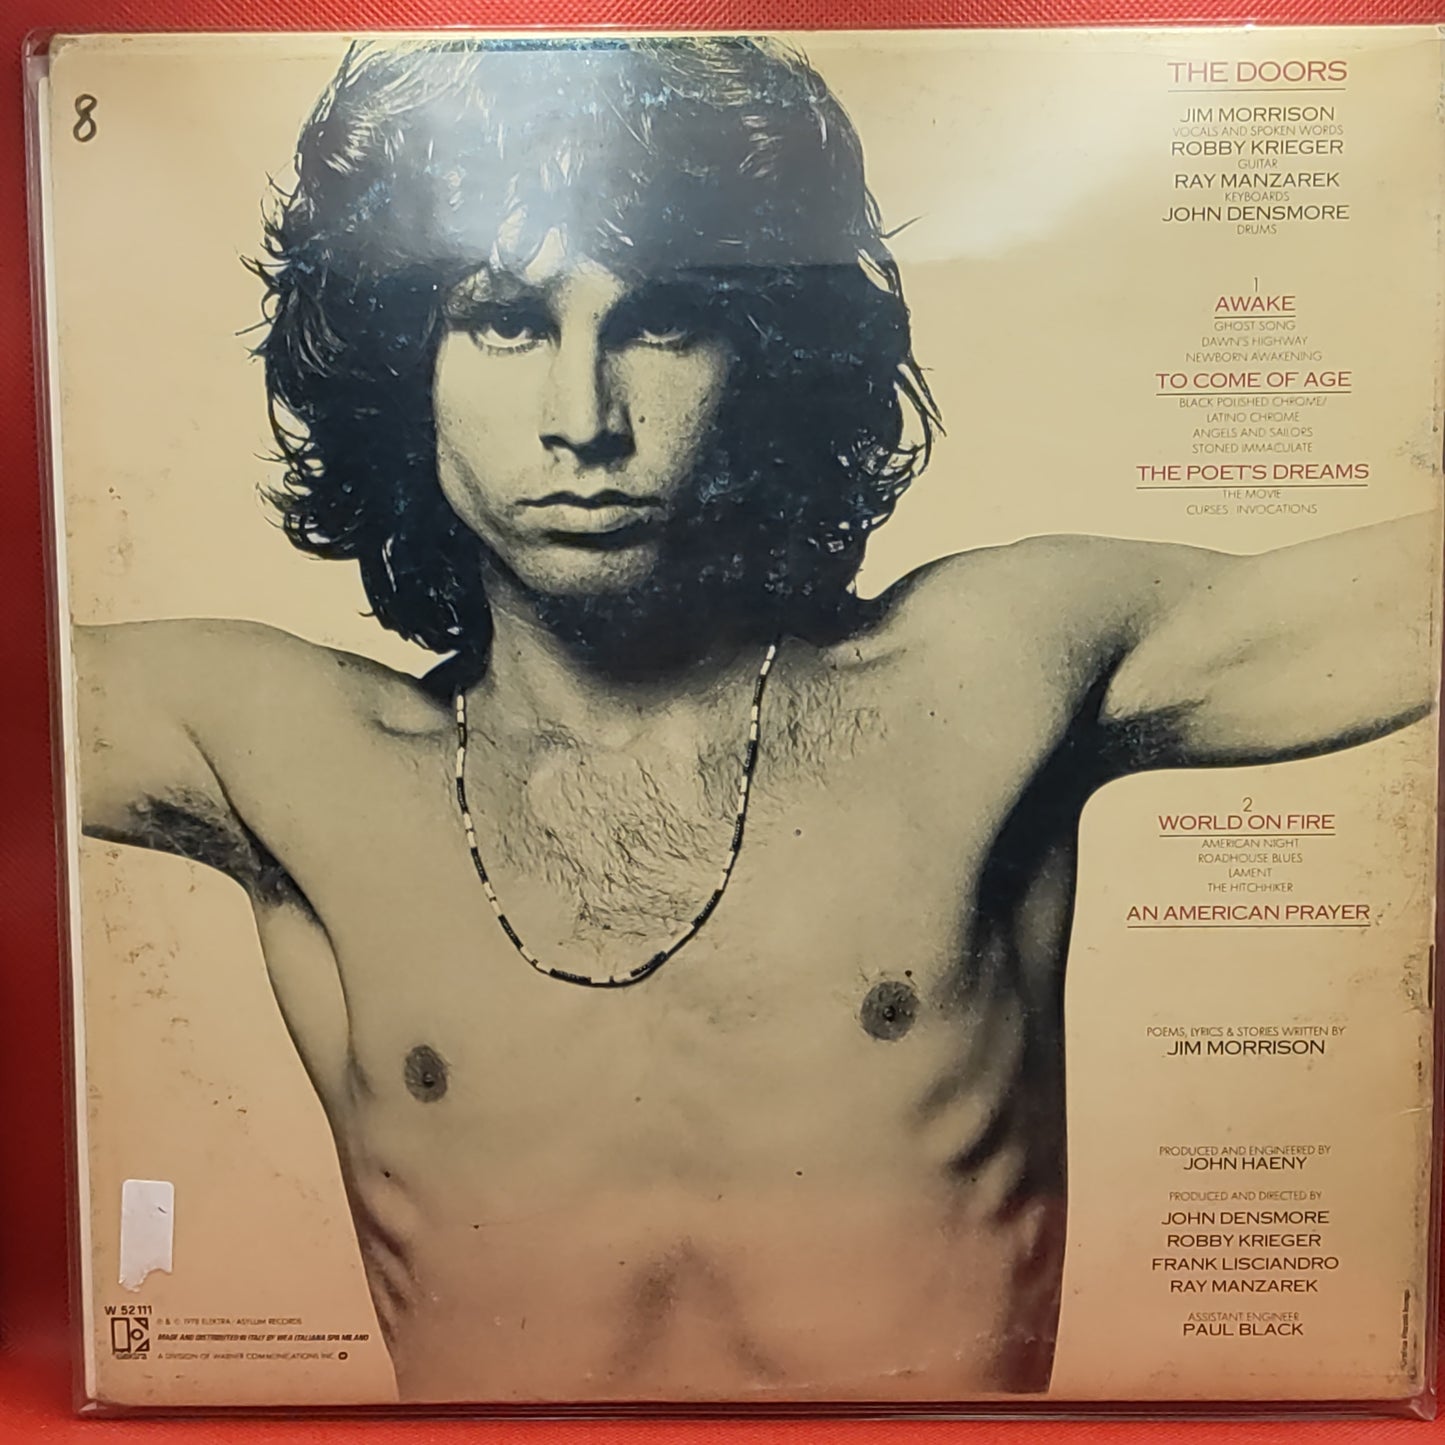 Jim Morrison Music By The Doors – An American Prayer